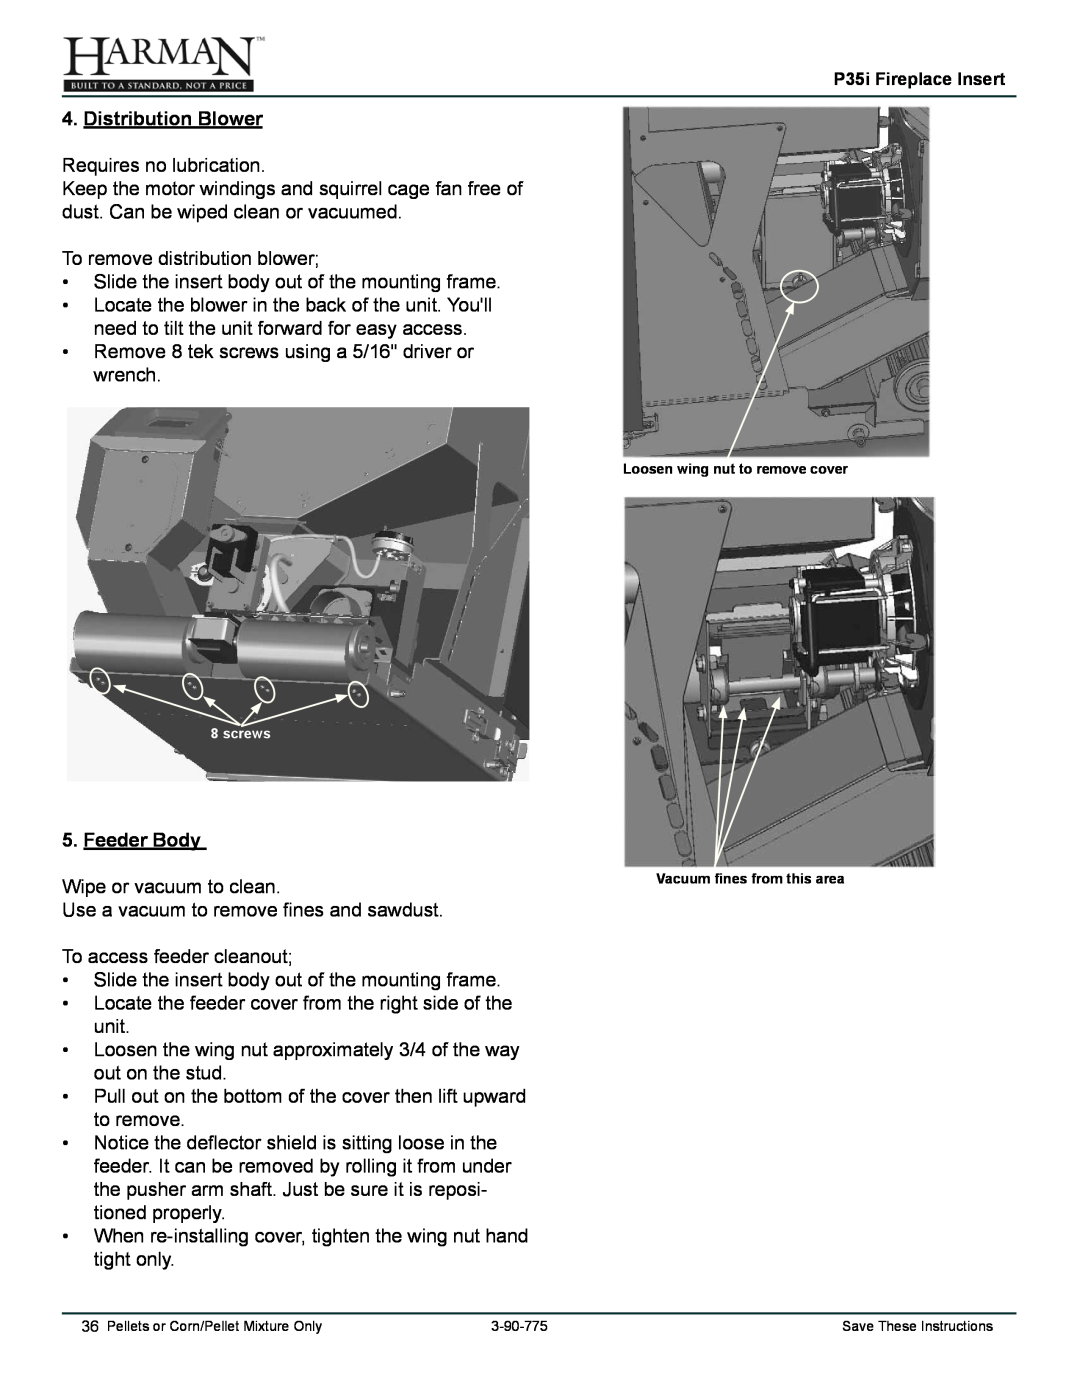 Harman Stove Company P35I owner manual Distribution Blower, Feeder Body 